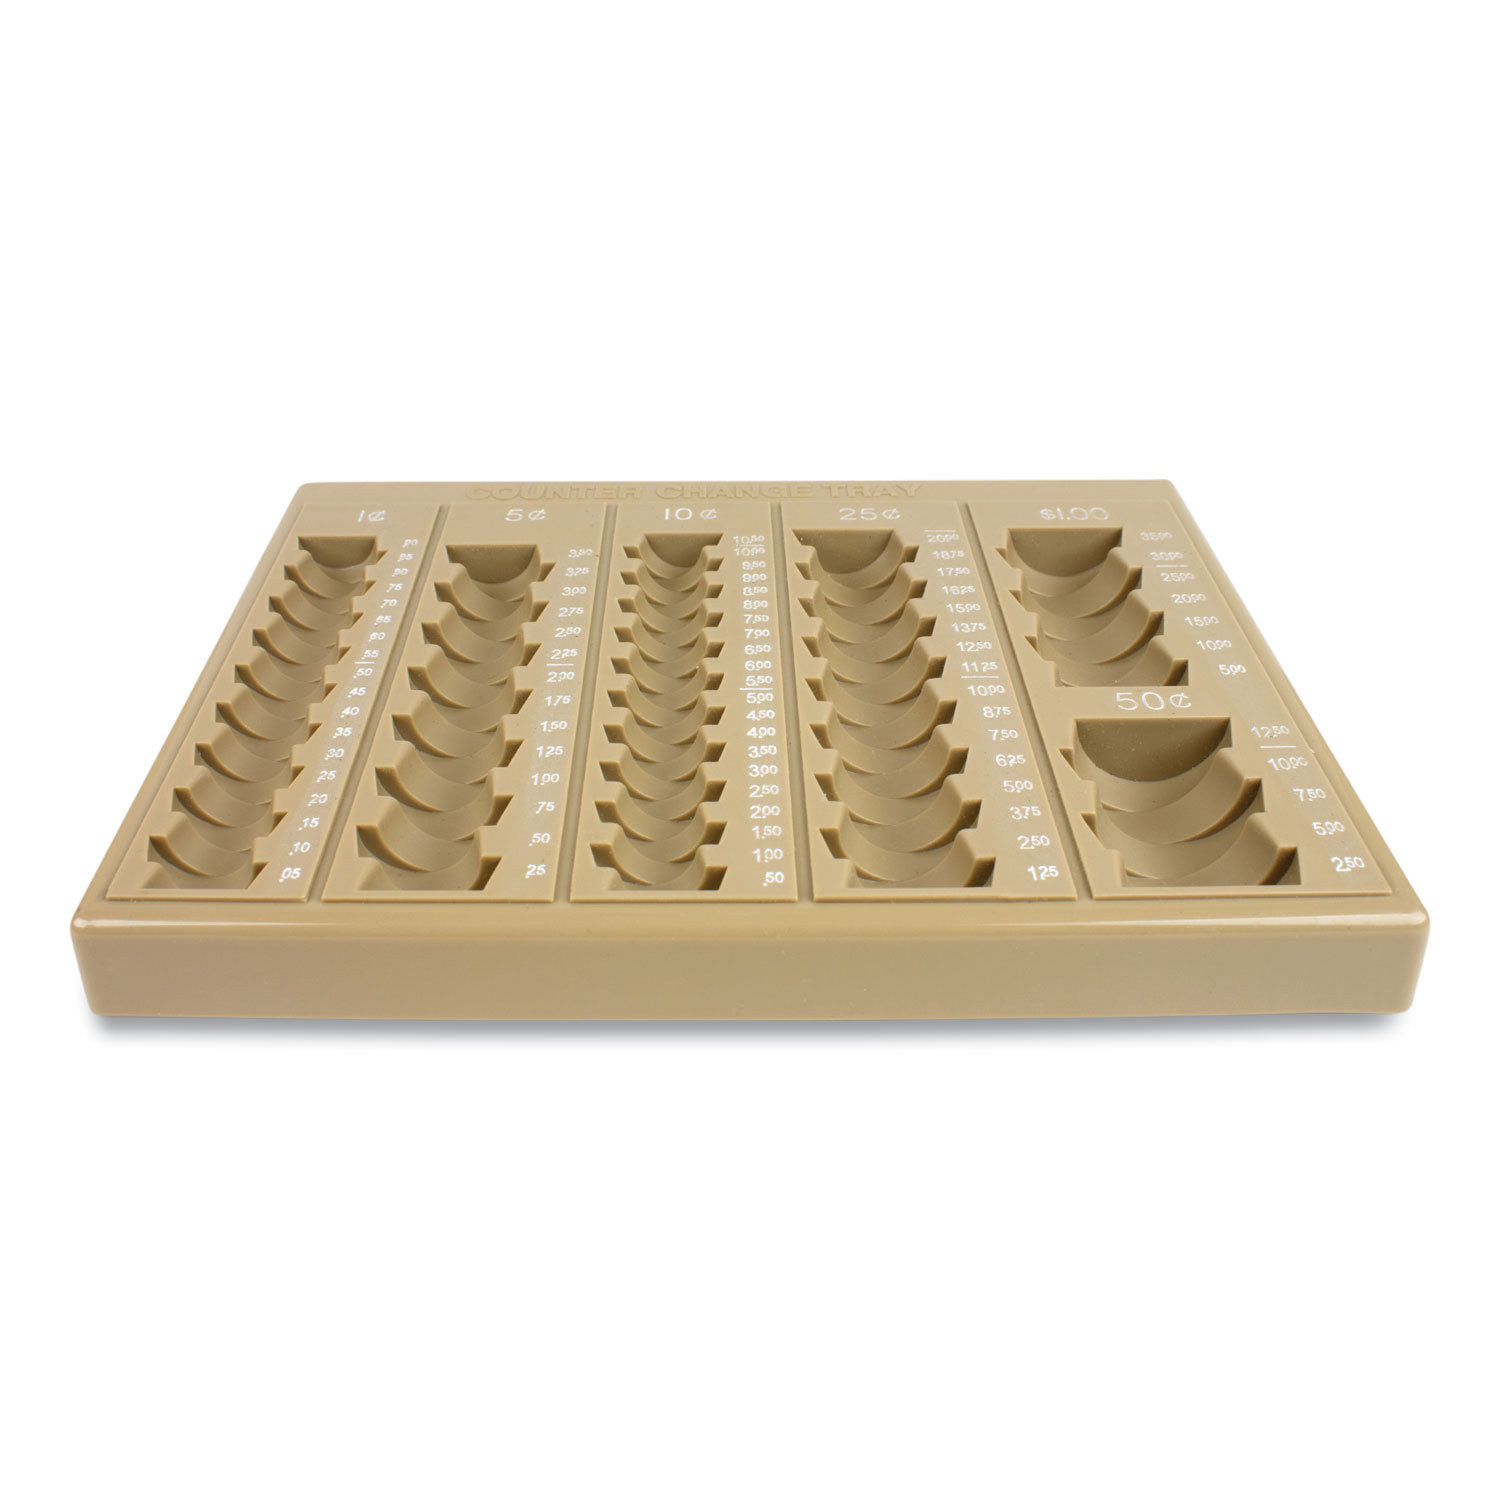  CONTROLTEK 500025 Plastic Coin Tray, 6 Compartments, 7.75 x 10 x 1.5, Tan (CNK500025) 